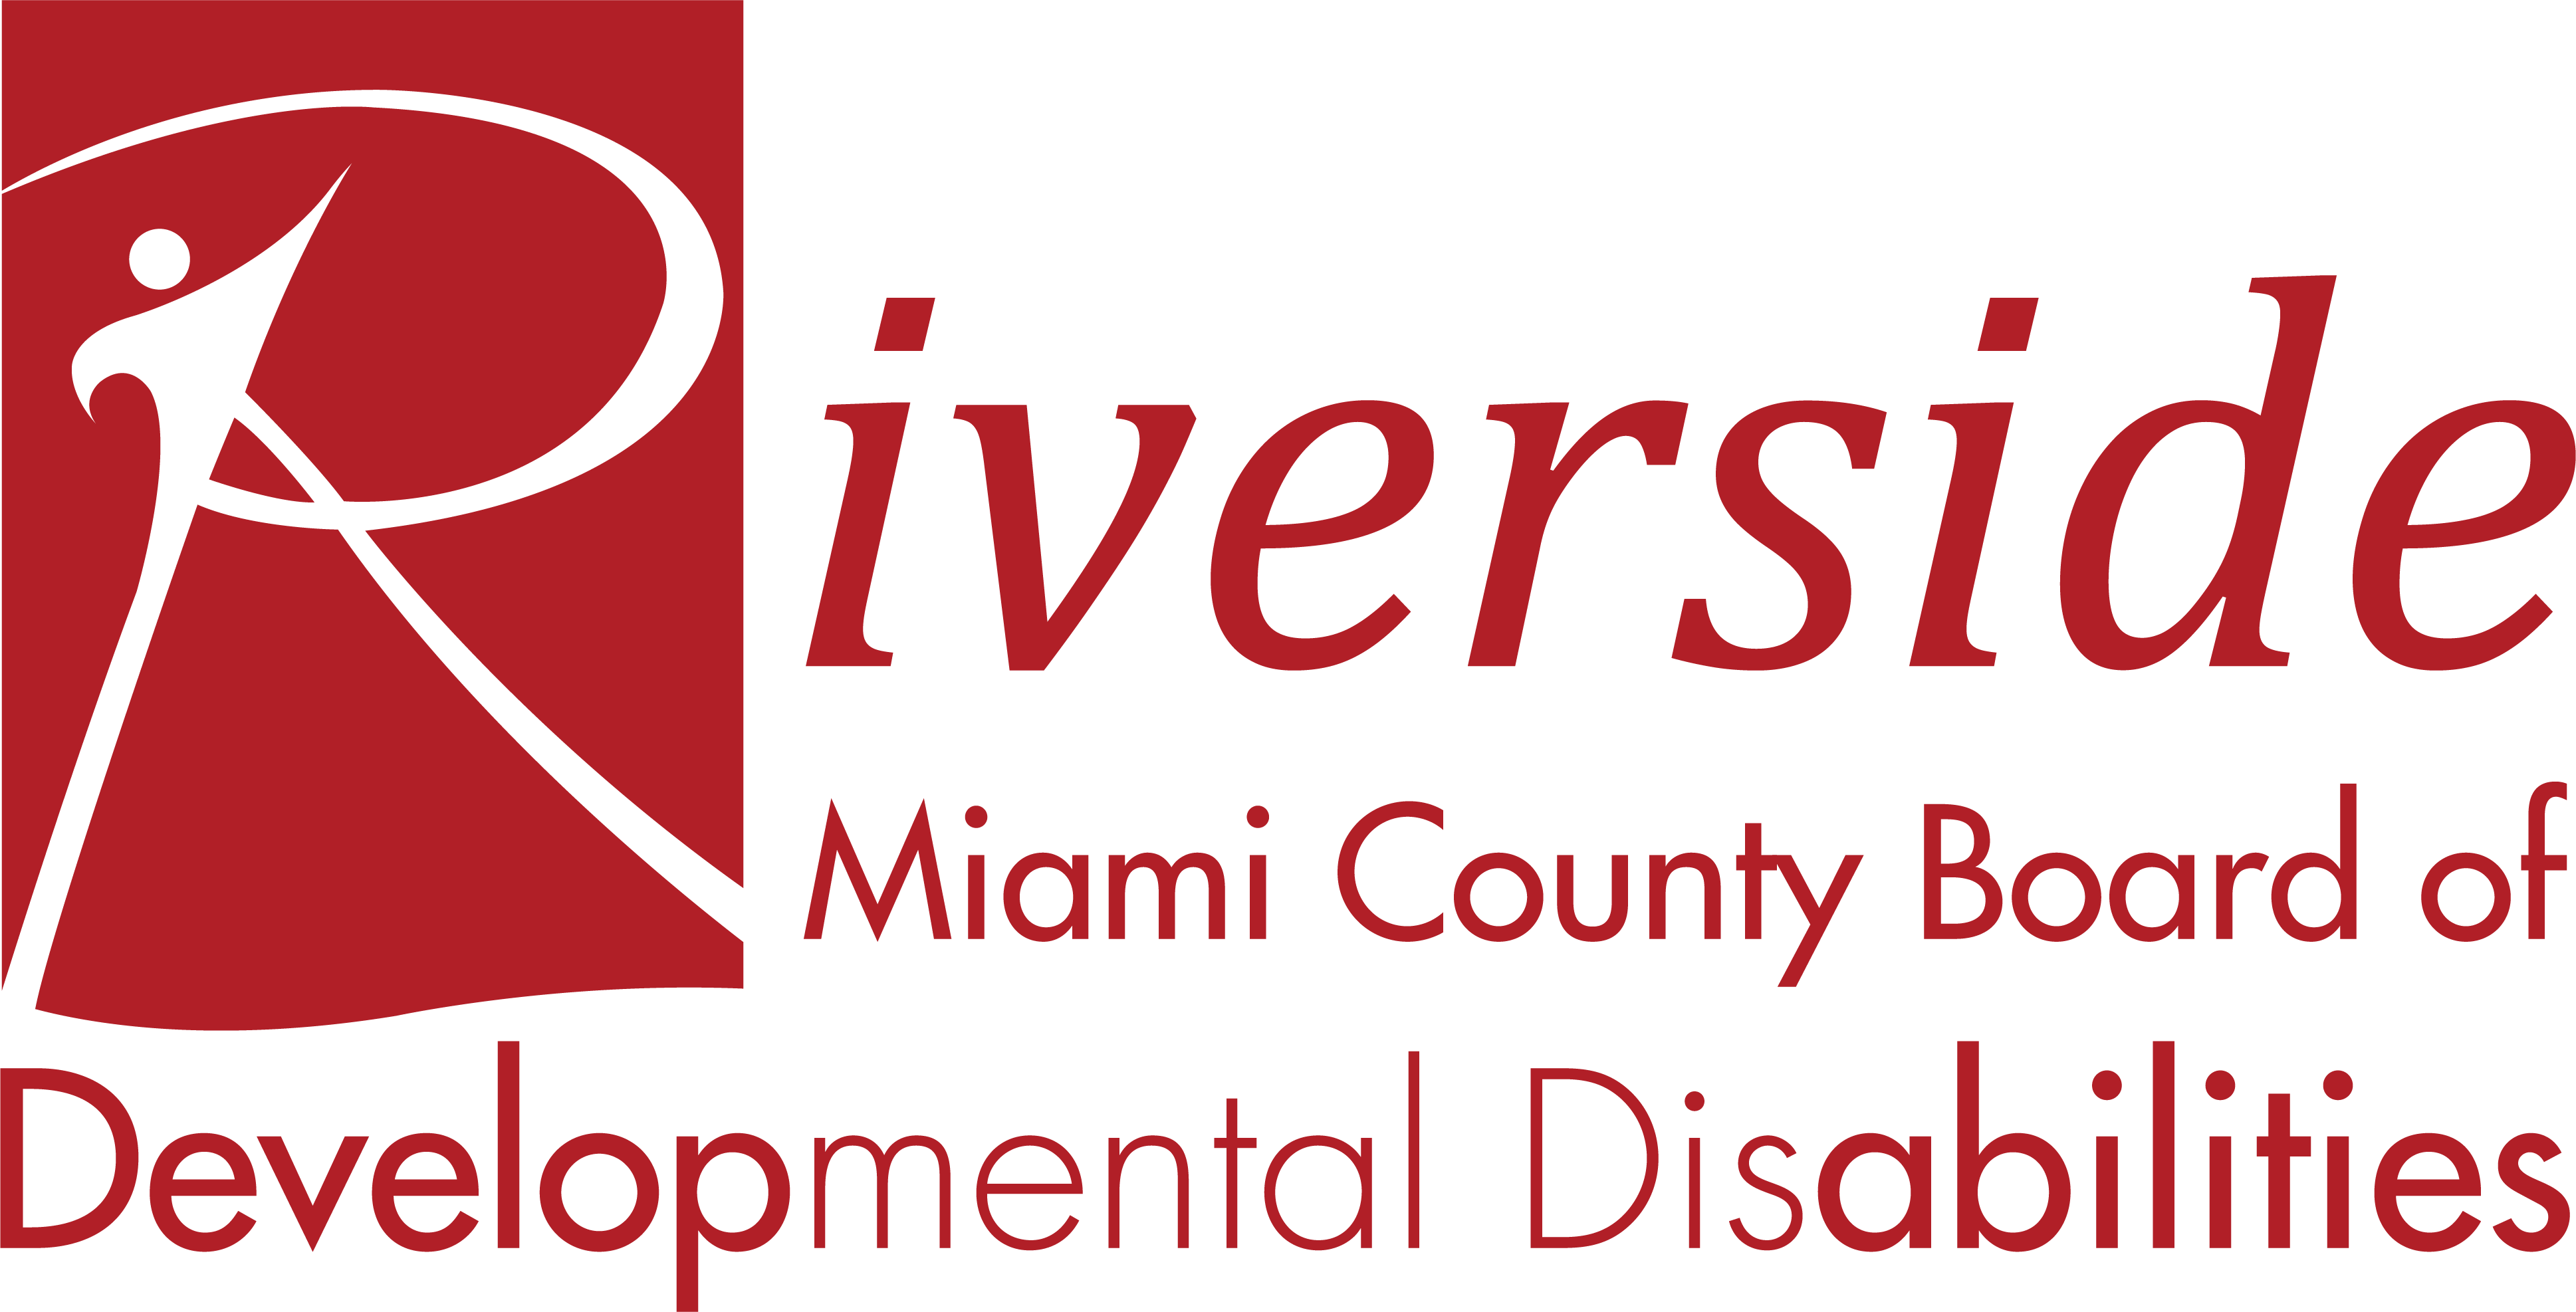 Riverside Miami County Board of Disabilities Logo